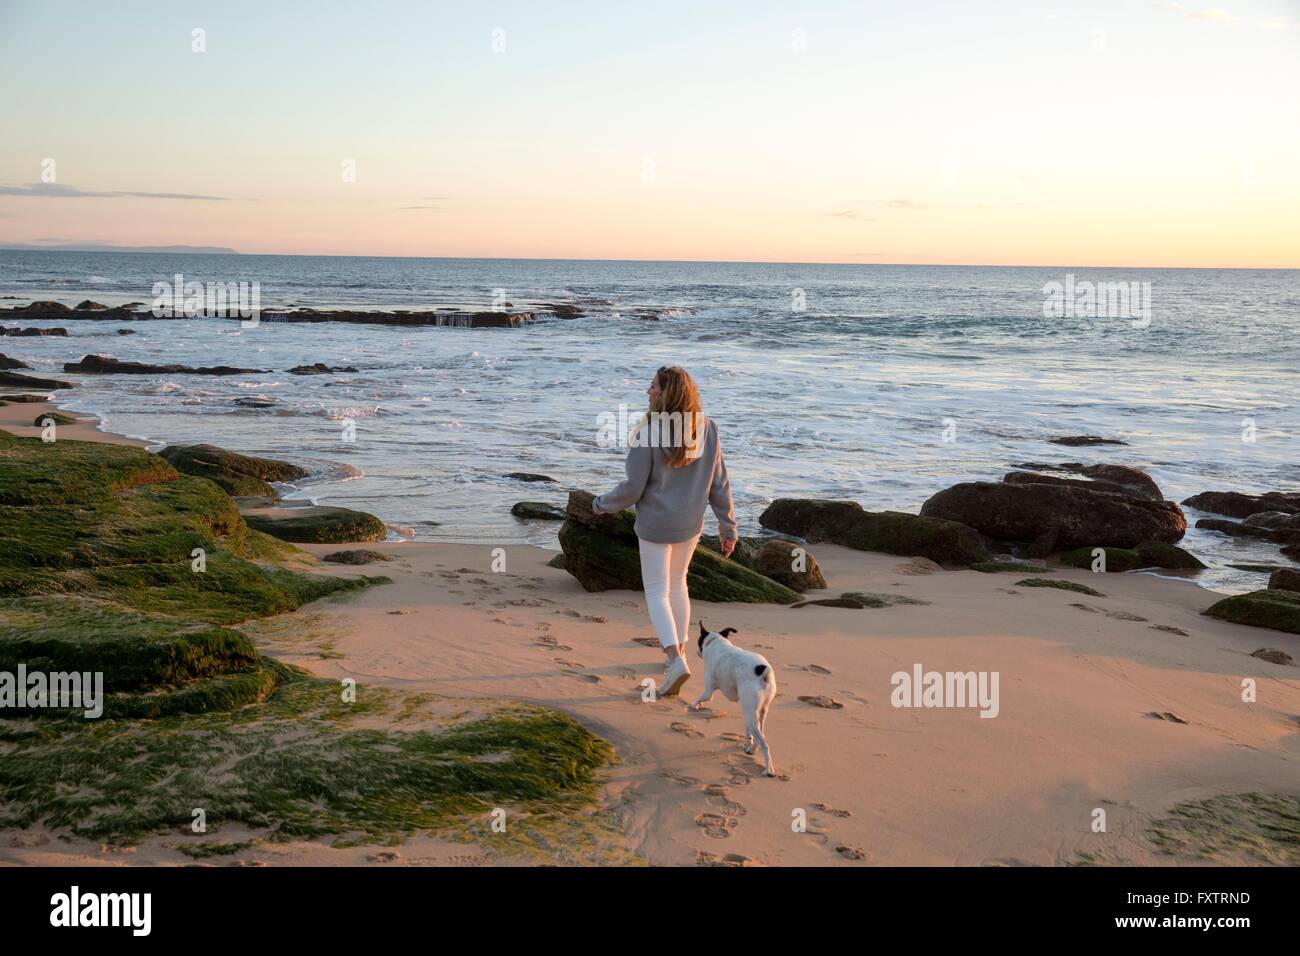 Rear view of woman walking dog along rocky beach, Cape of Trafalgar, Spain Stock Photo